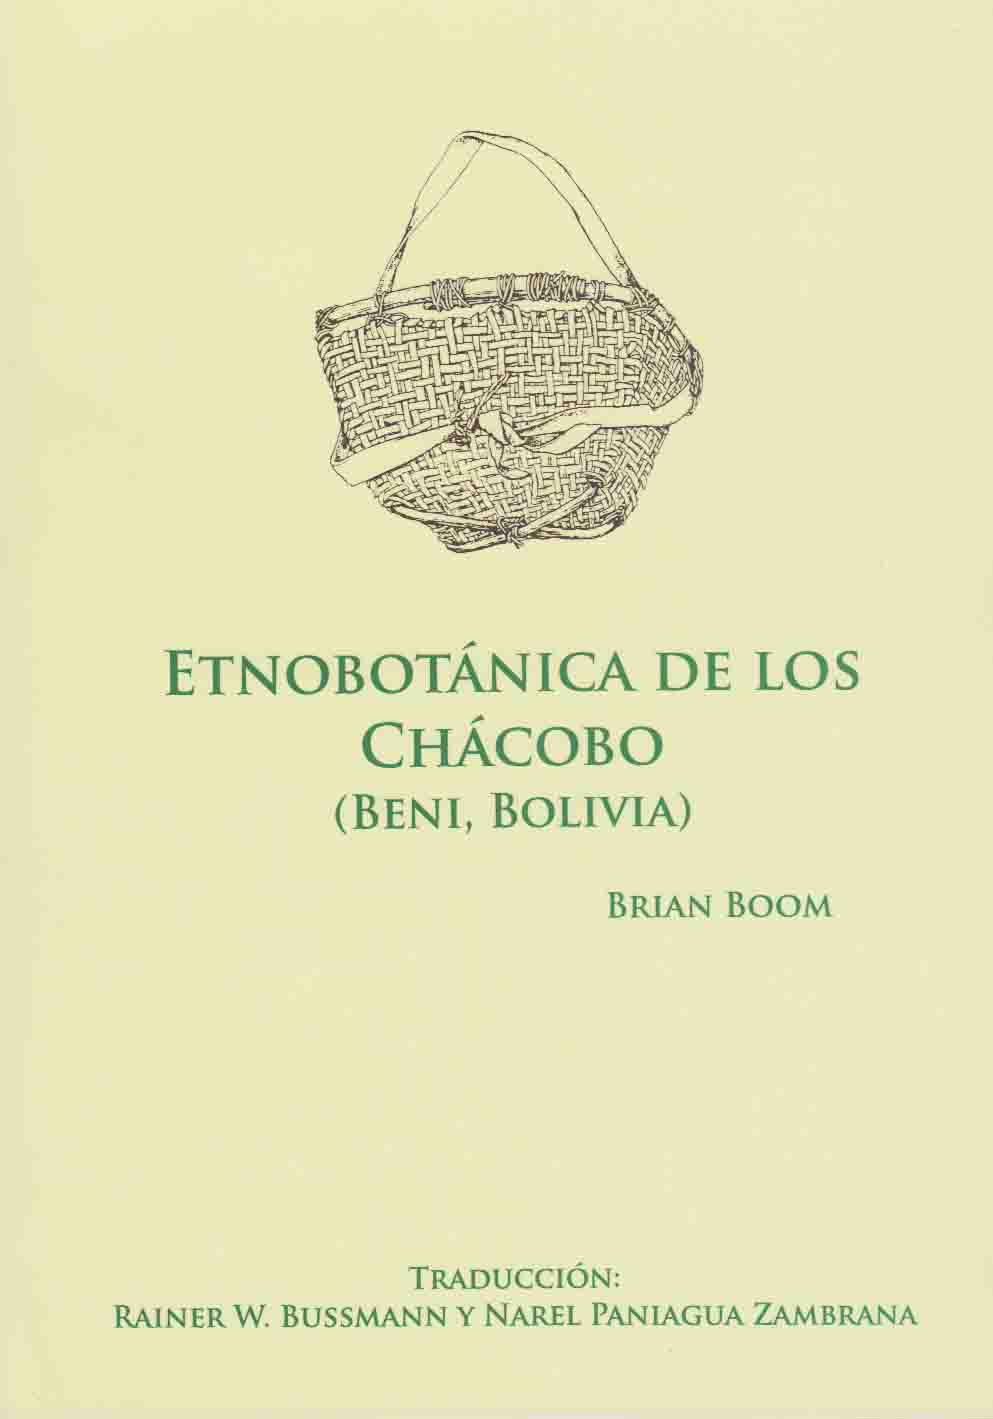 https://www.researchgate.net/publication/261985682_Etnobotanica_de_los_Chacobo_Beni_Bolivia_-_una_traduccion_de_la_publicacion_Boom_B_1996_Ethnobotany_of_the_Chacobo_Indians_Beni_Bolivia